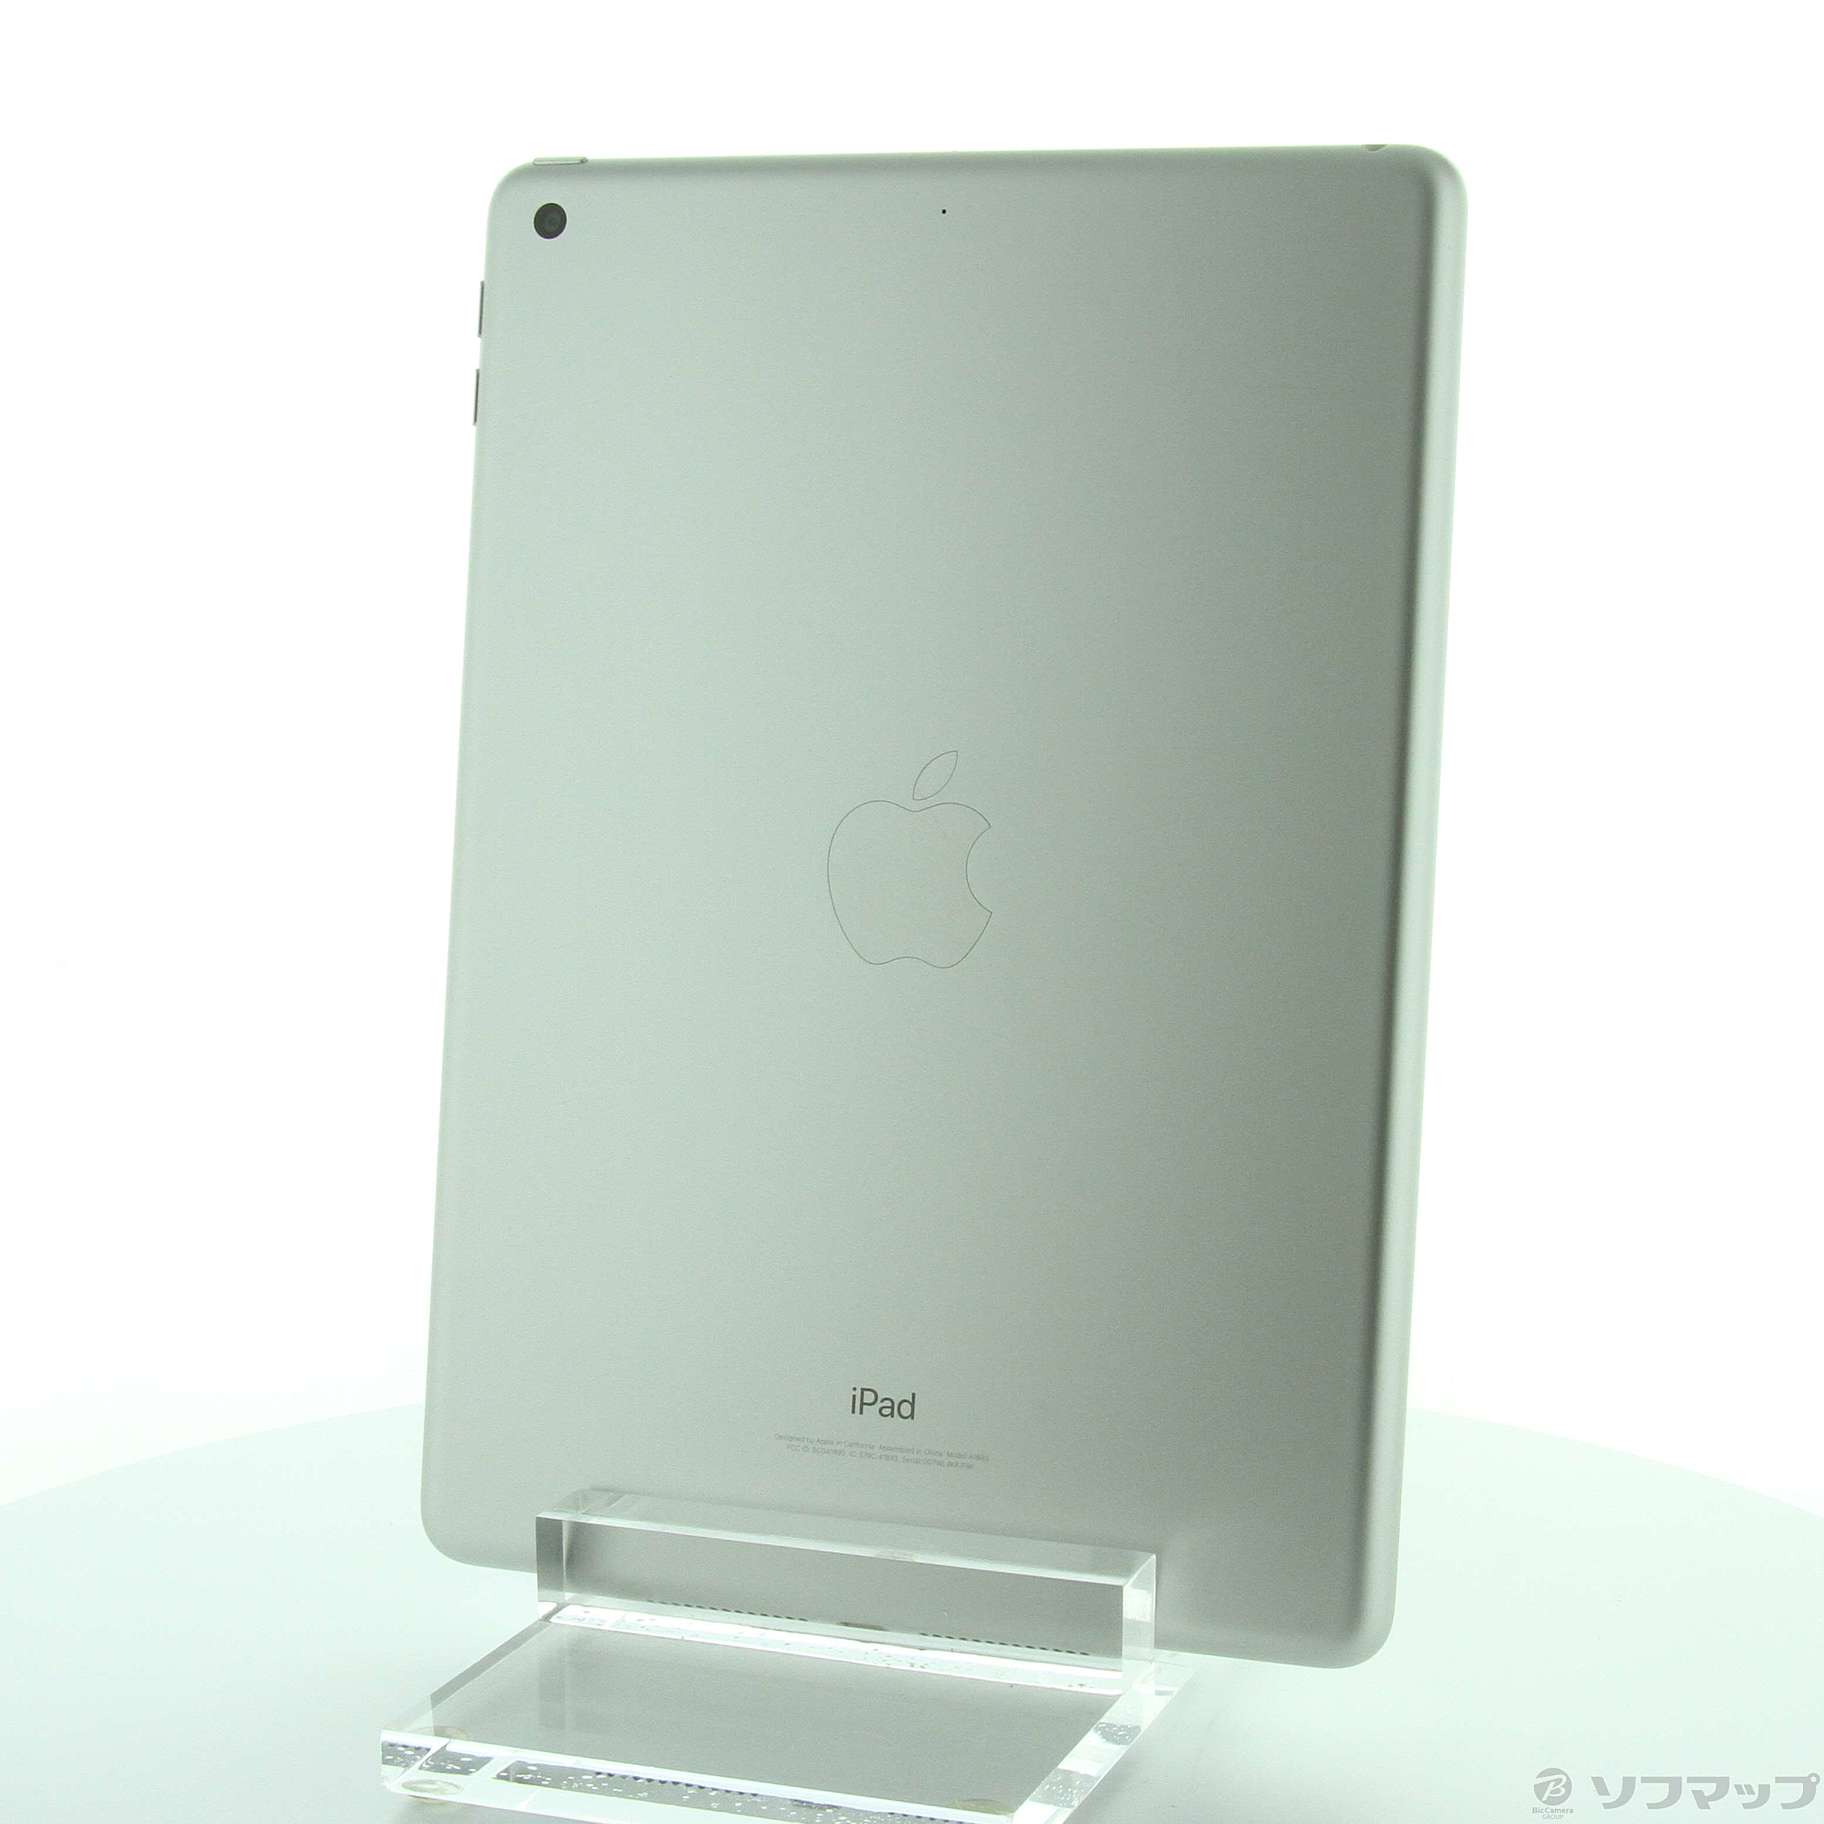 Apple iPad 第6世代 32GB Wi-Fi シルバー (アイパッド) - www